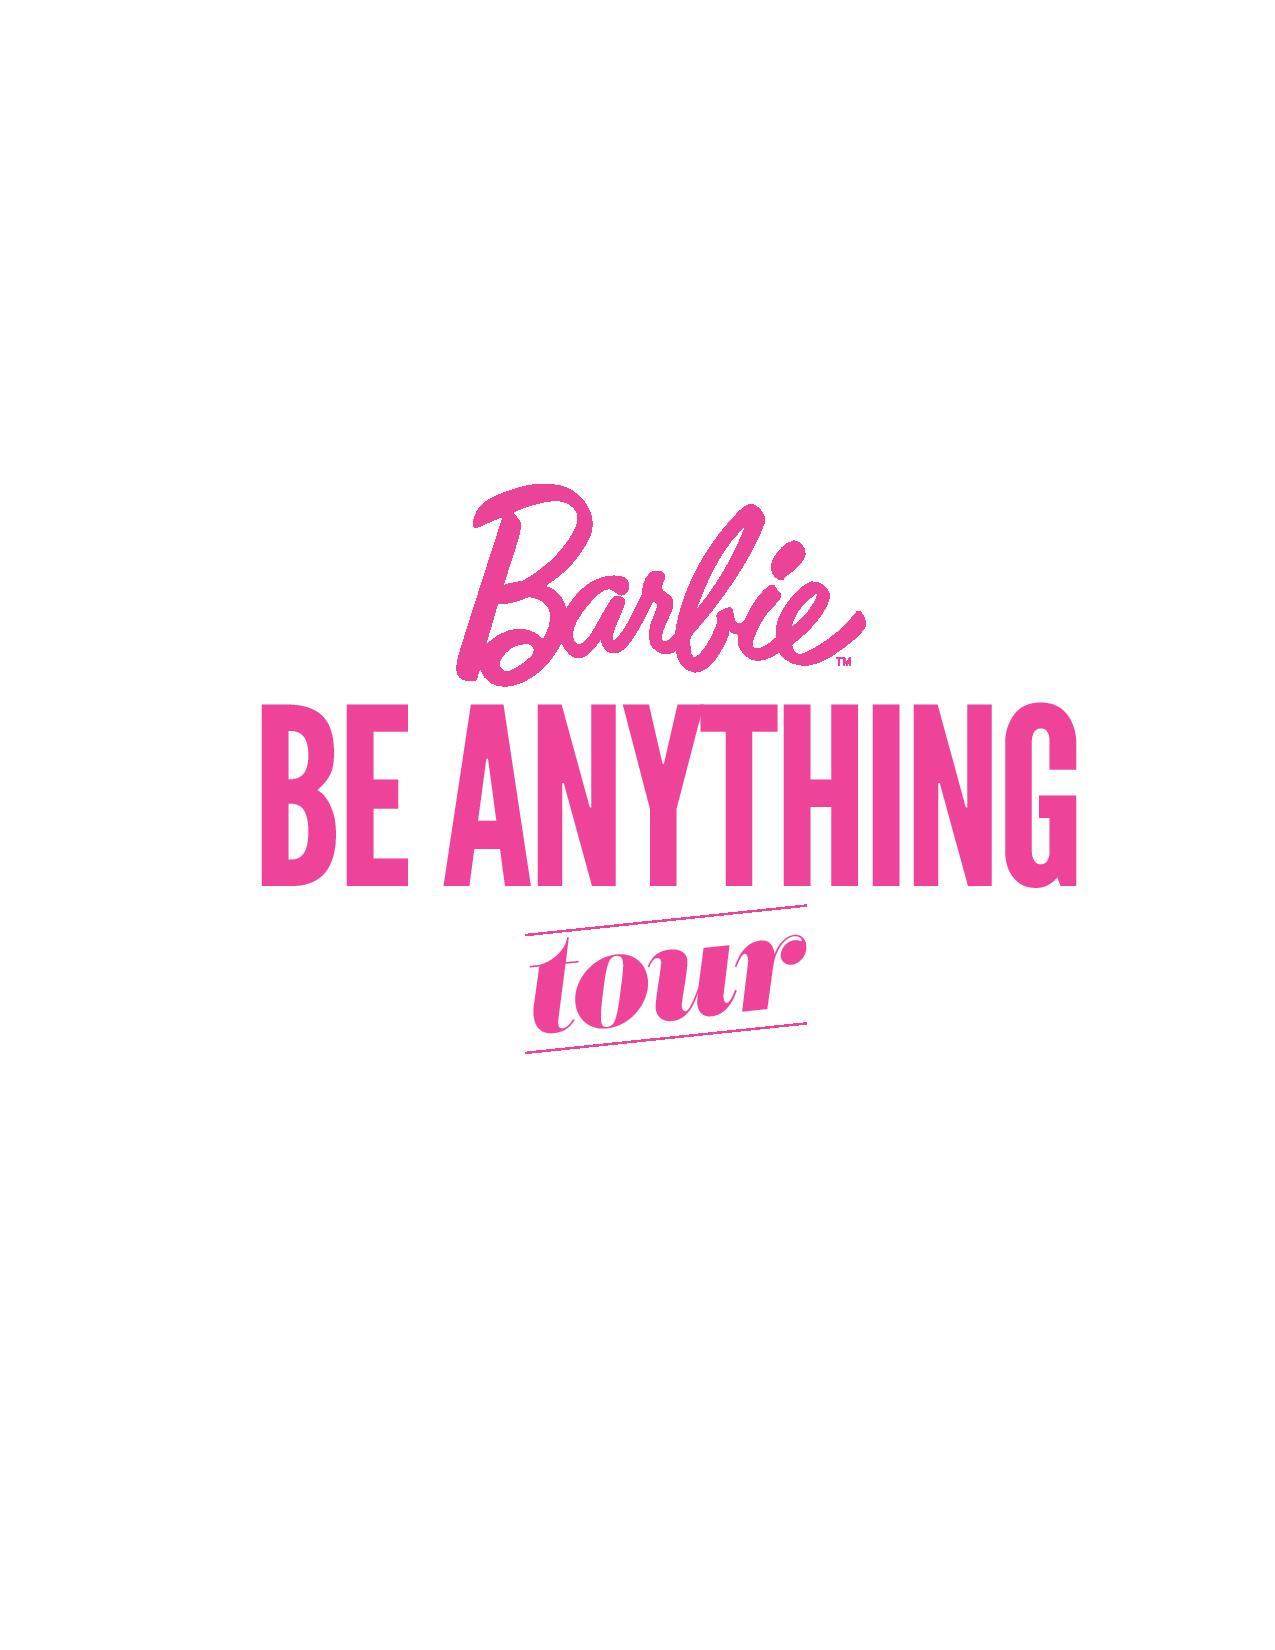 barbie tour at walmart